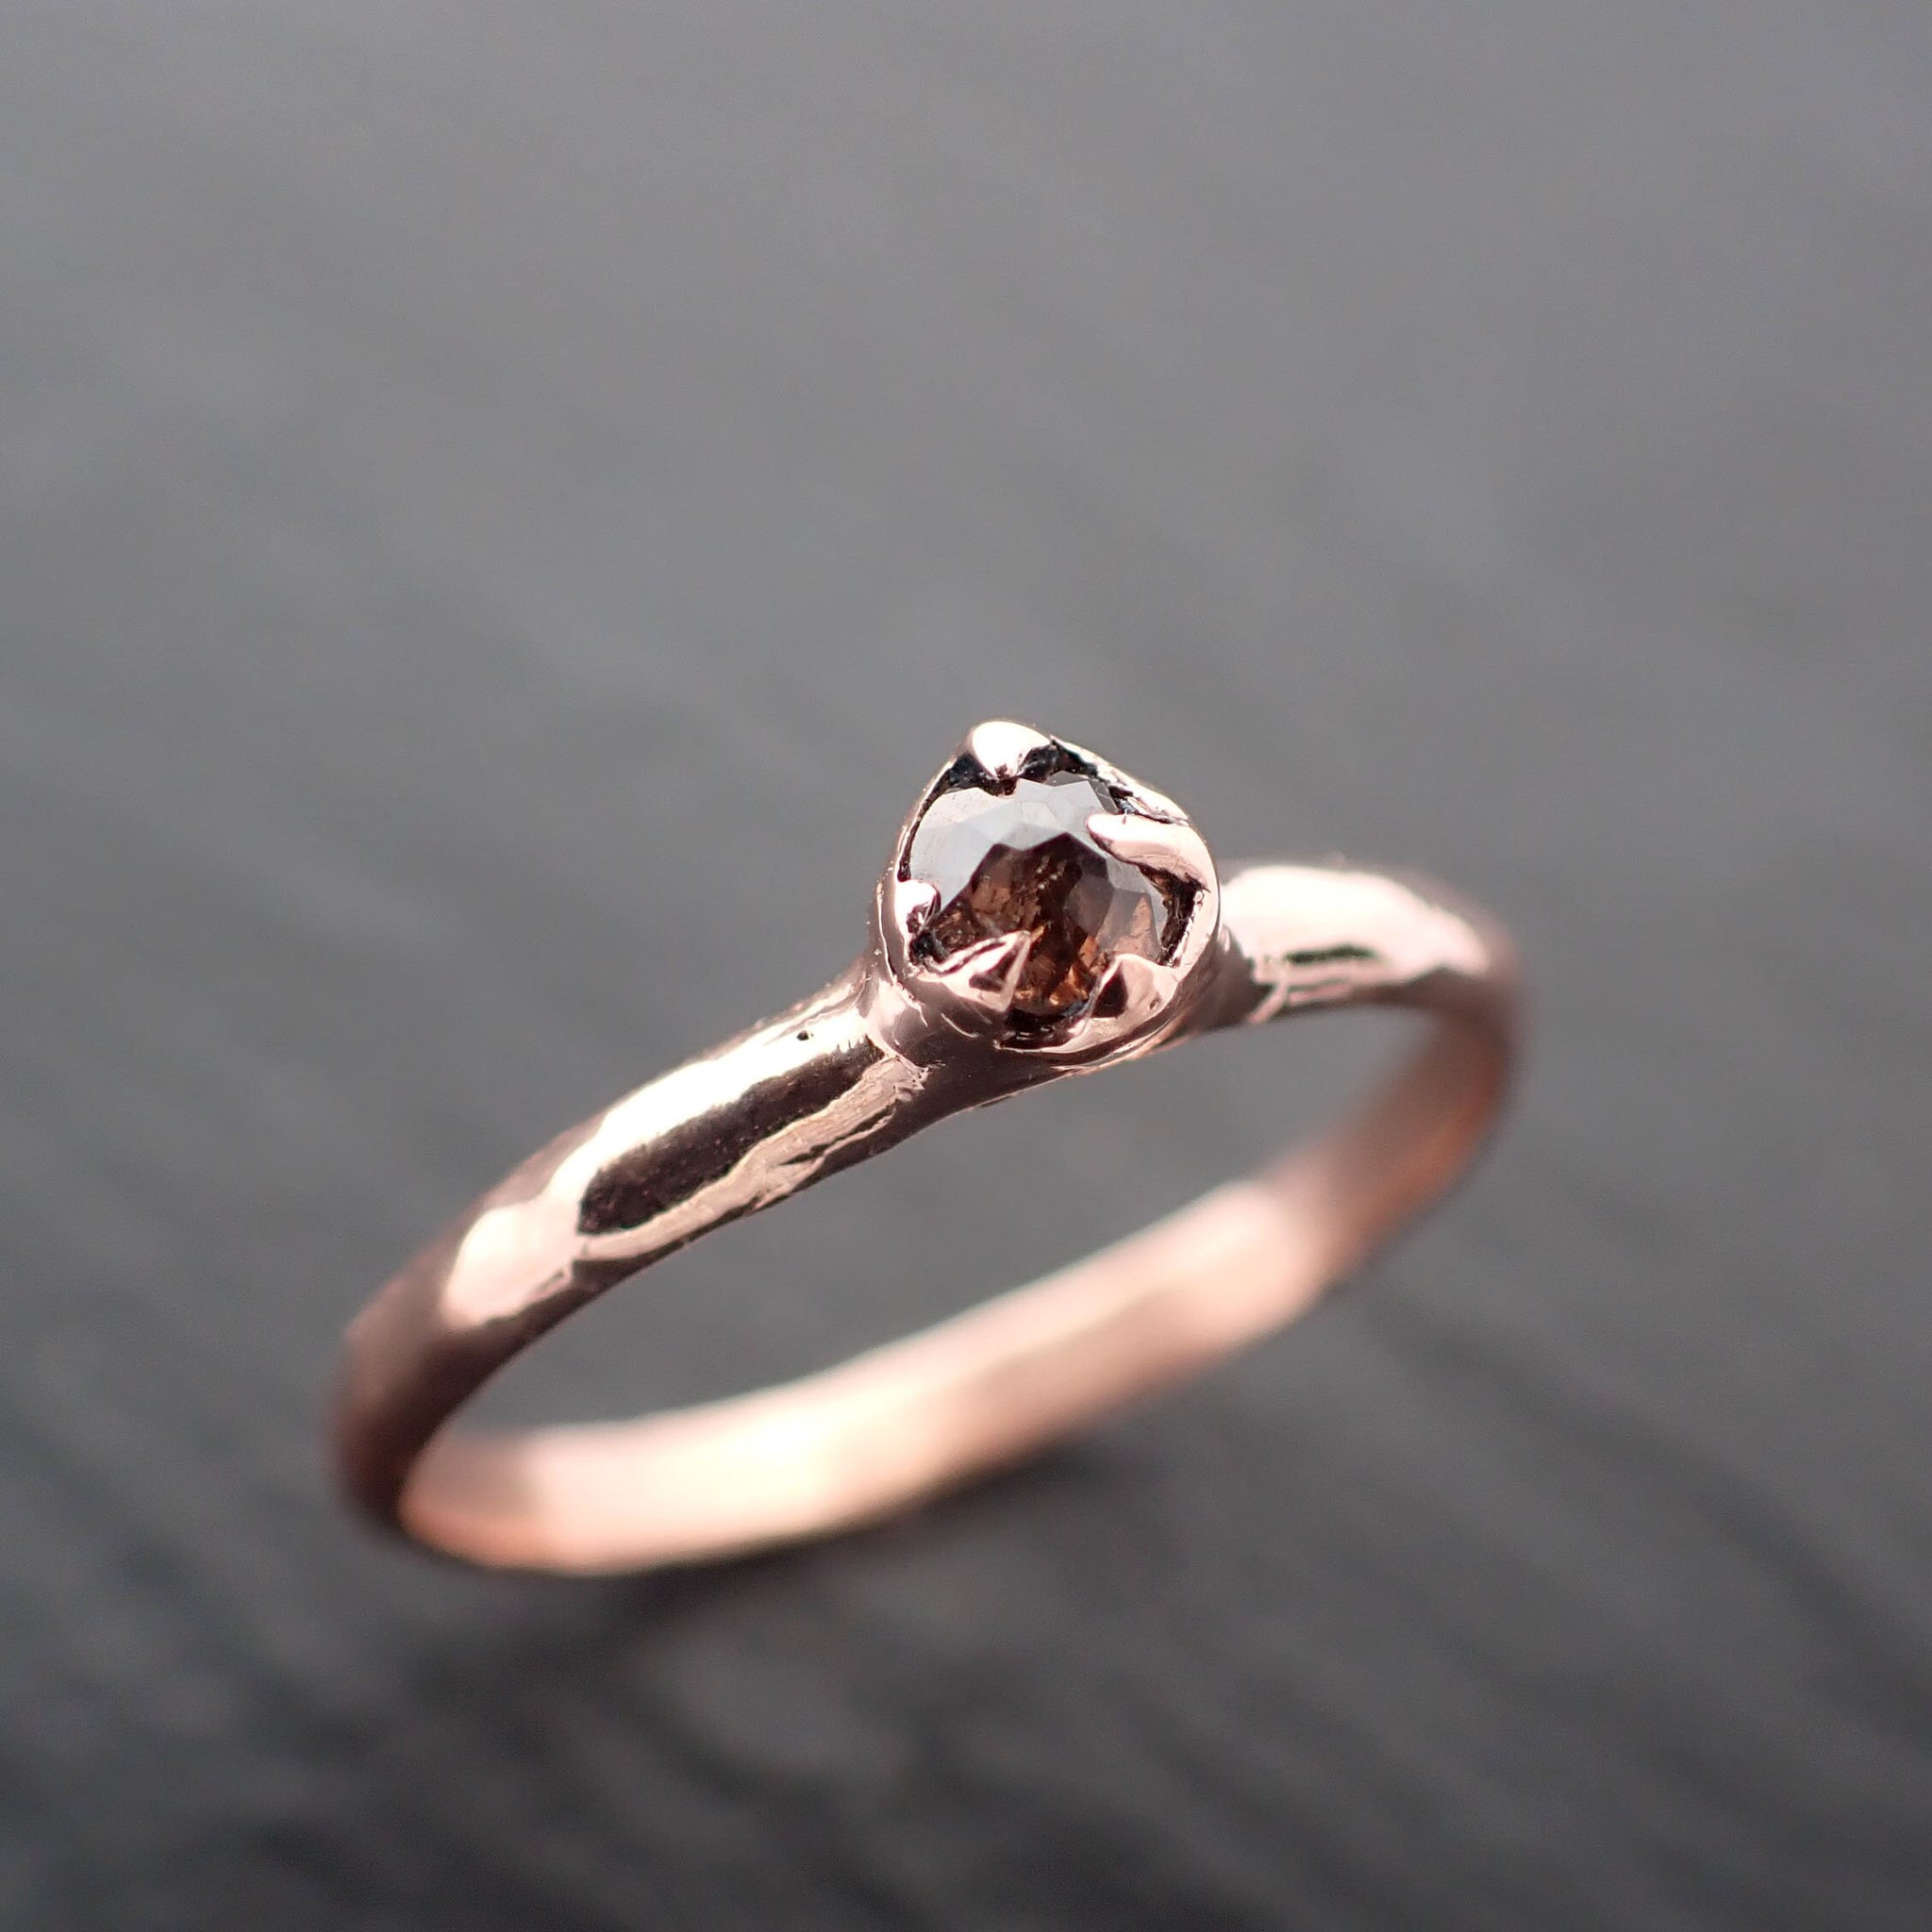 Faceted Fancy cut cognac Diamond Solitaire Engagement 14k Rose Gold Wedding Ring byAngeline 3522